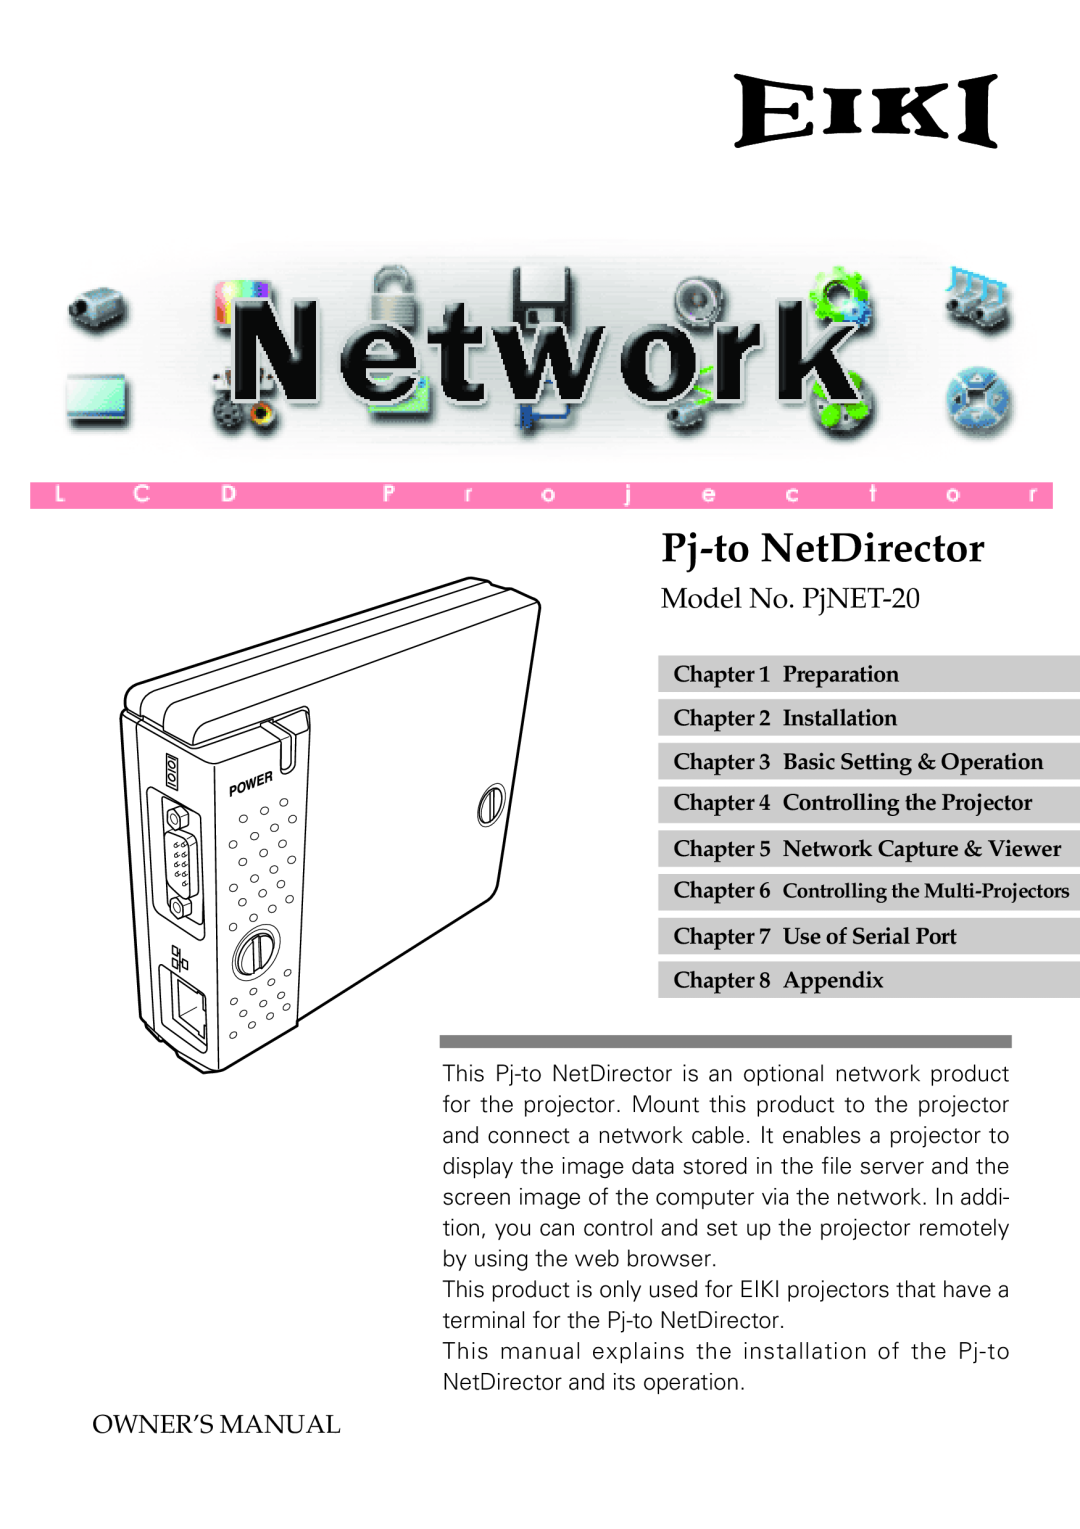 Eiki owner manual Model No. PjNET-20, Owner’S Manual, Pj-to NetDirector, Preparation Installation 